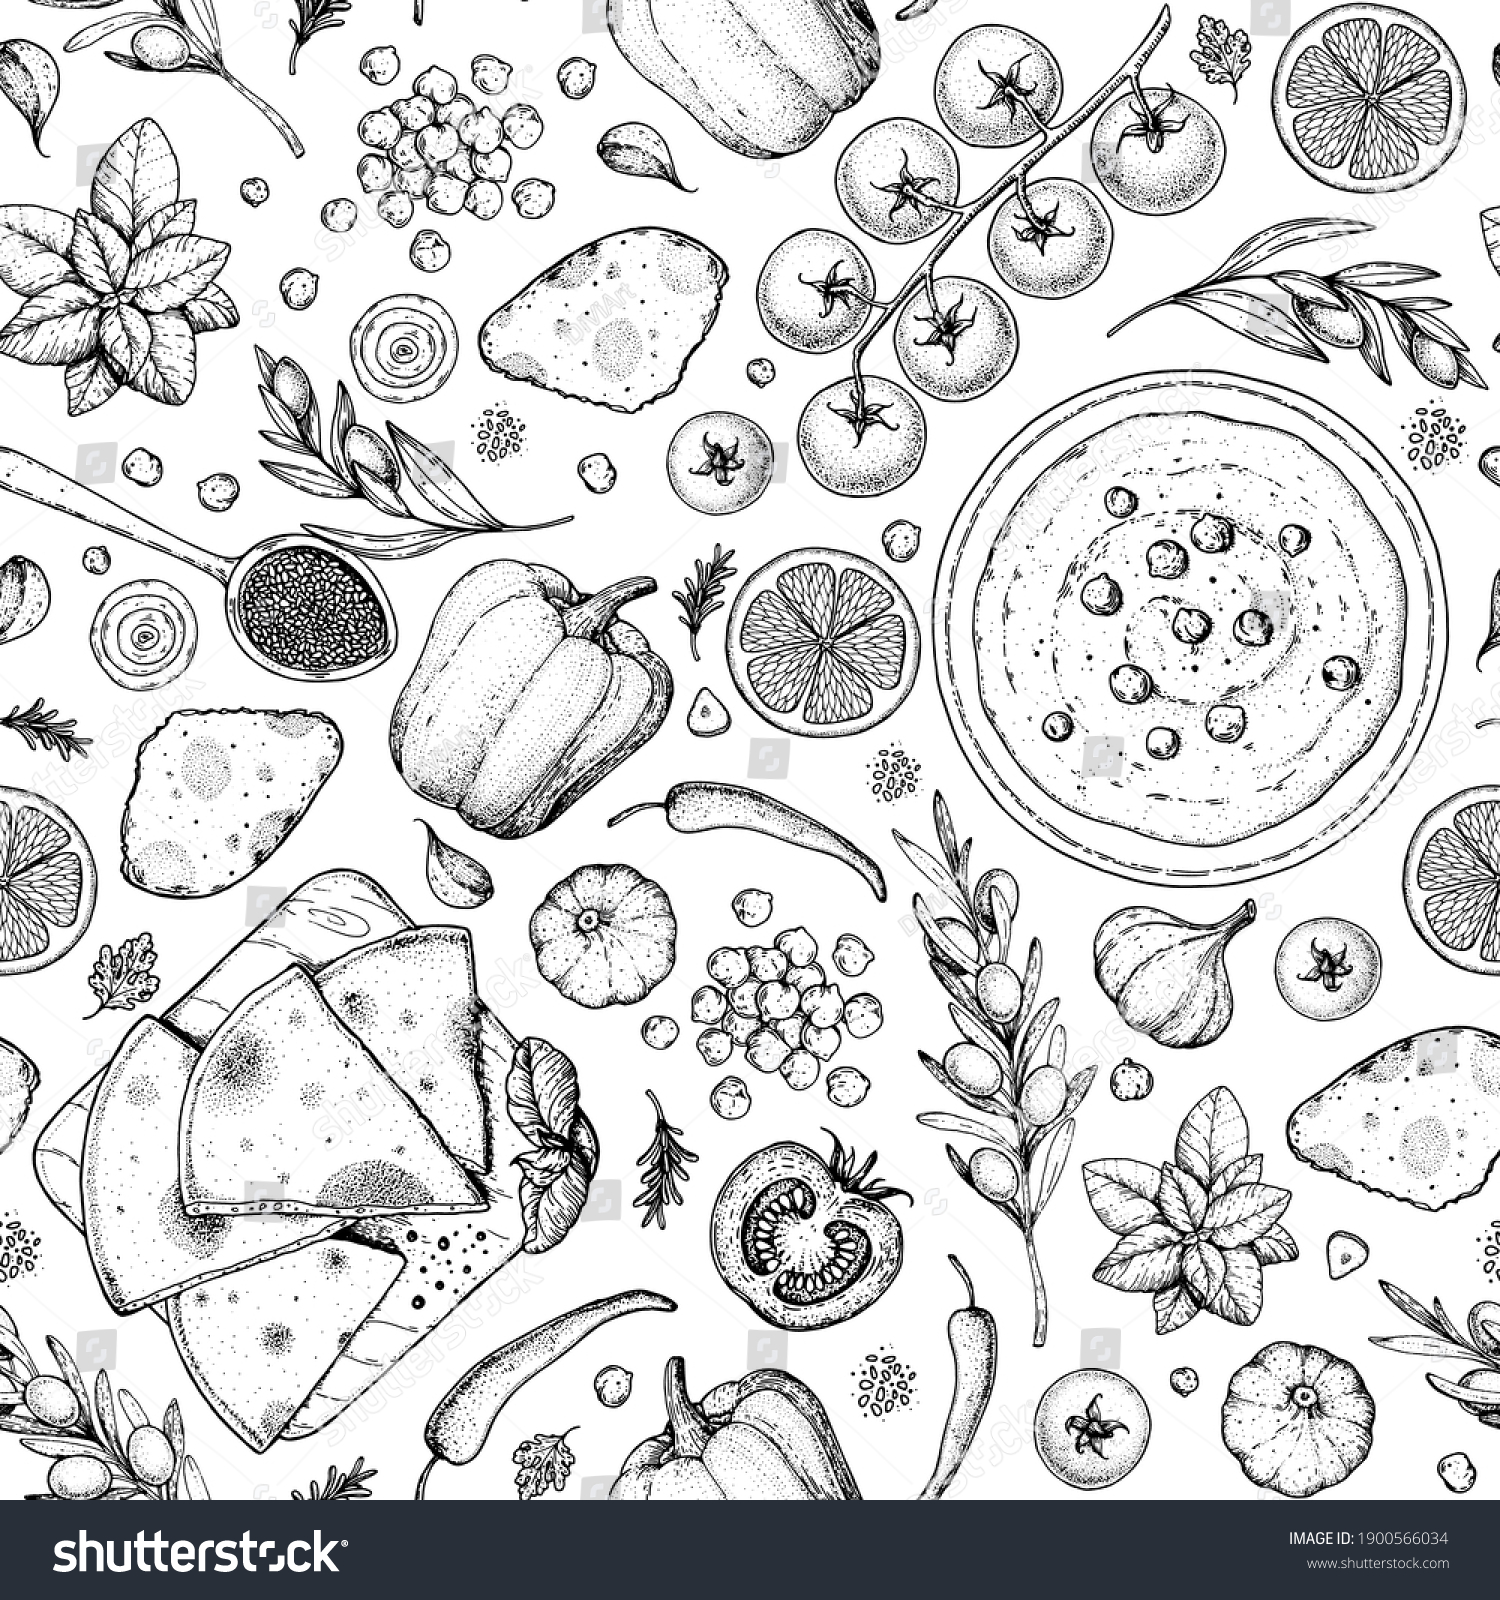 Hummus cooking and ingredients for hummus, sketch illustration. Seamless pattern Middle eastern cuisine frame. Healthy food, design elements. Hand drawn, package design. Mediterranean food. Vegan menu #1900566034